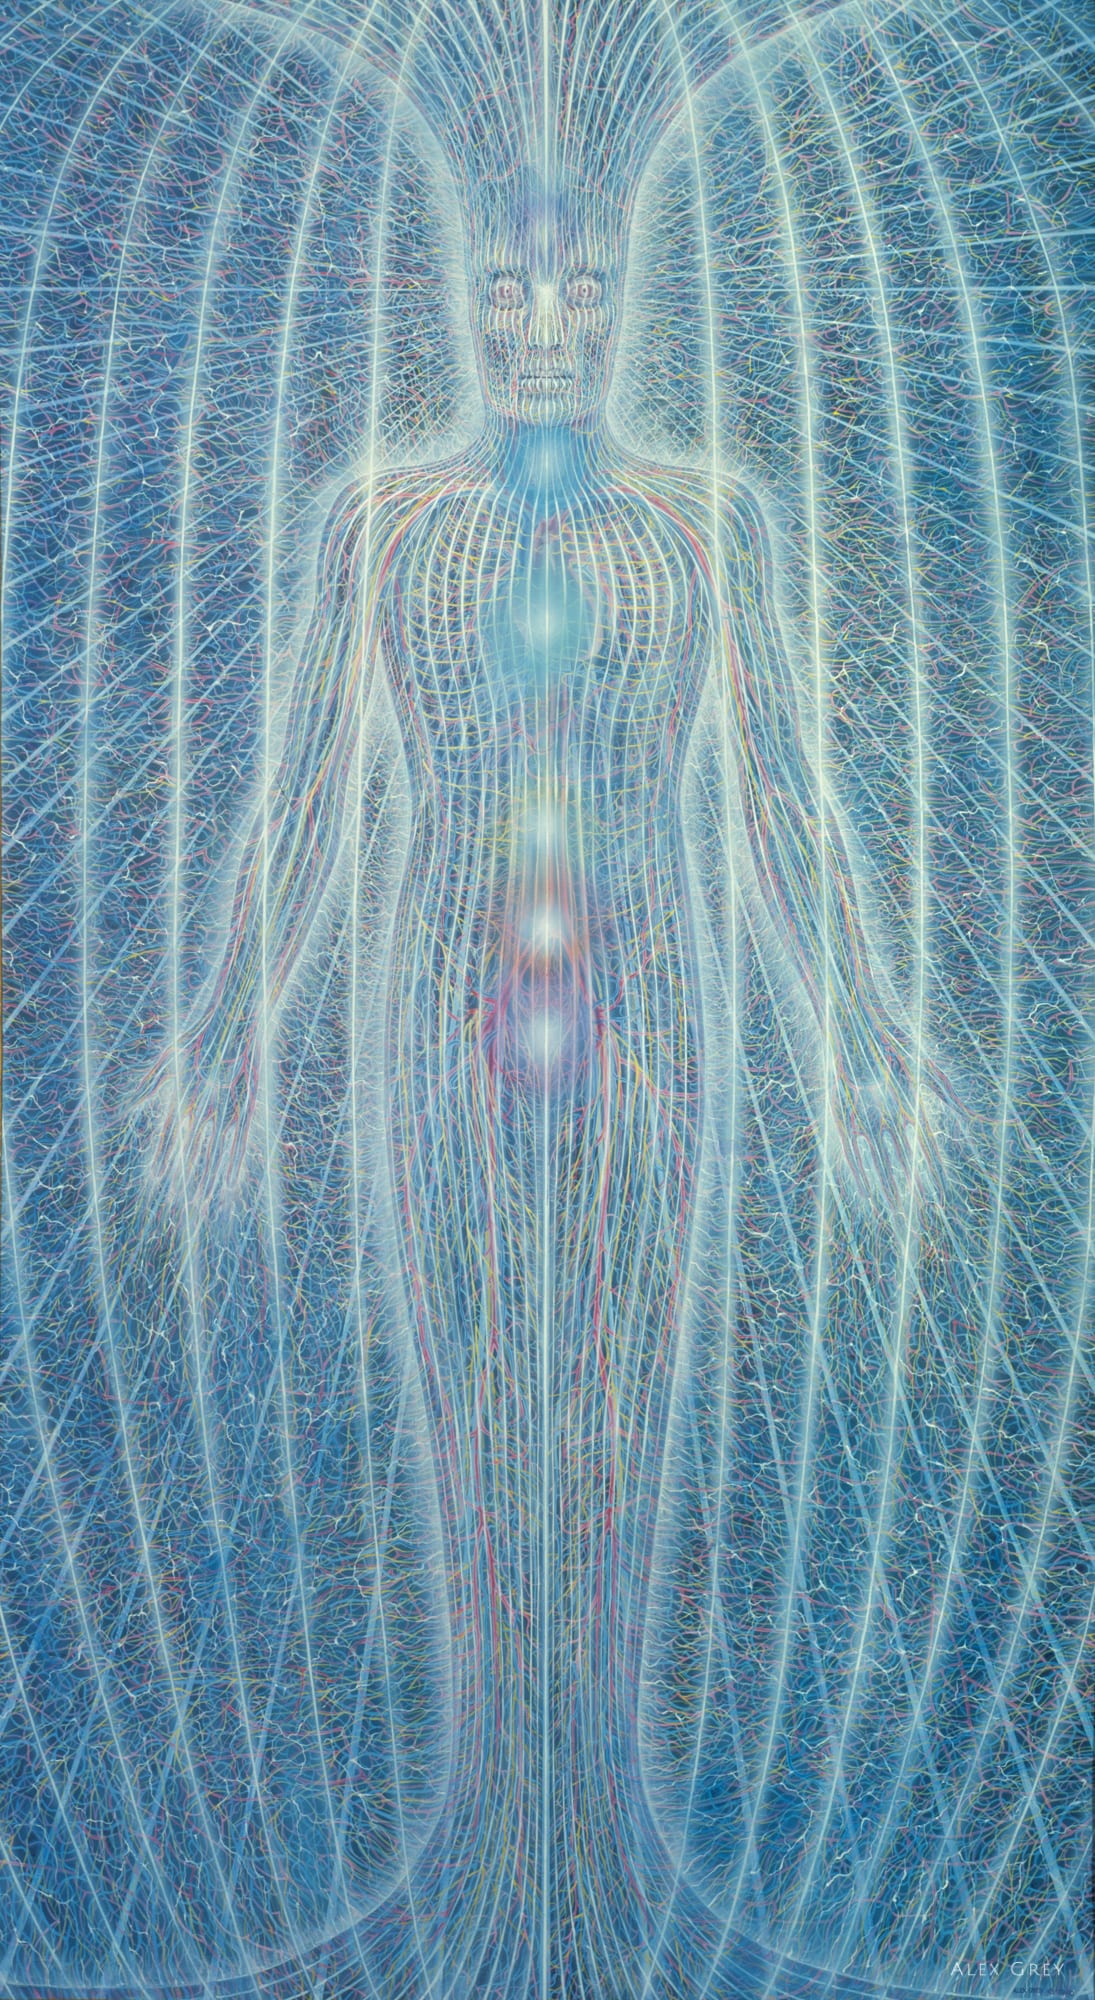 Spiritual Energy System, 1981